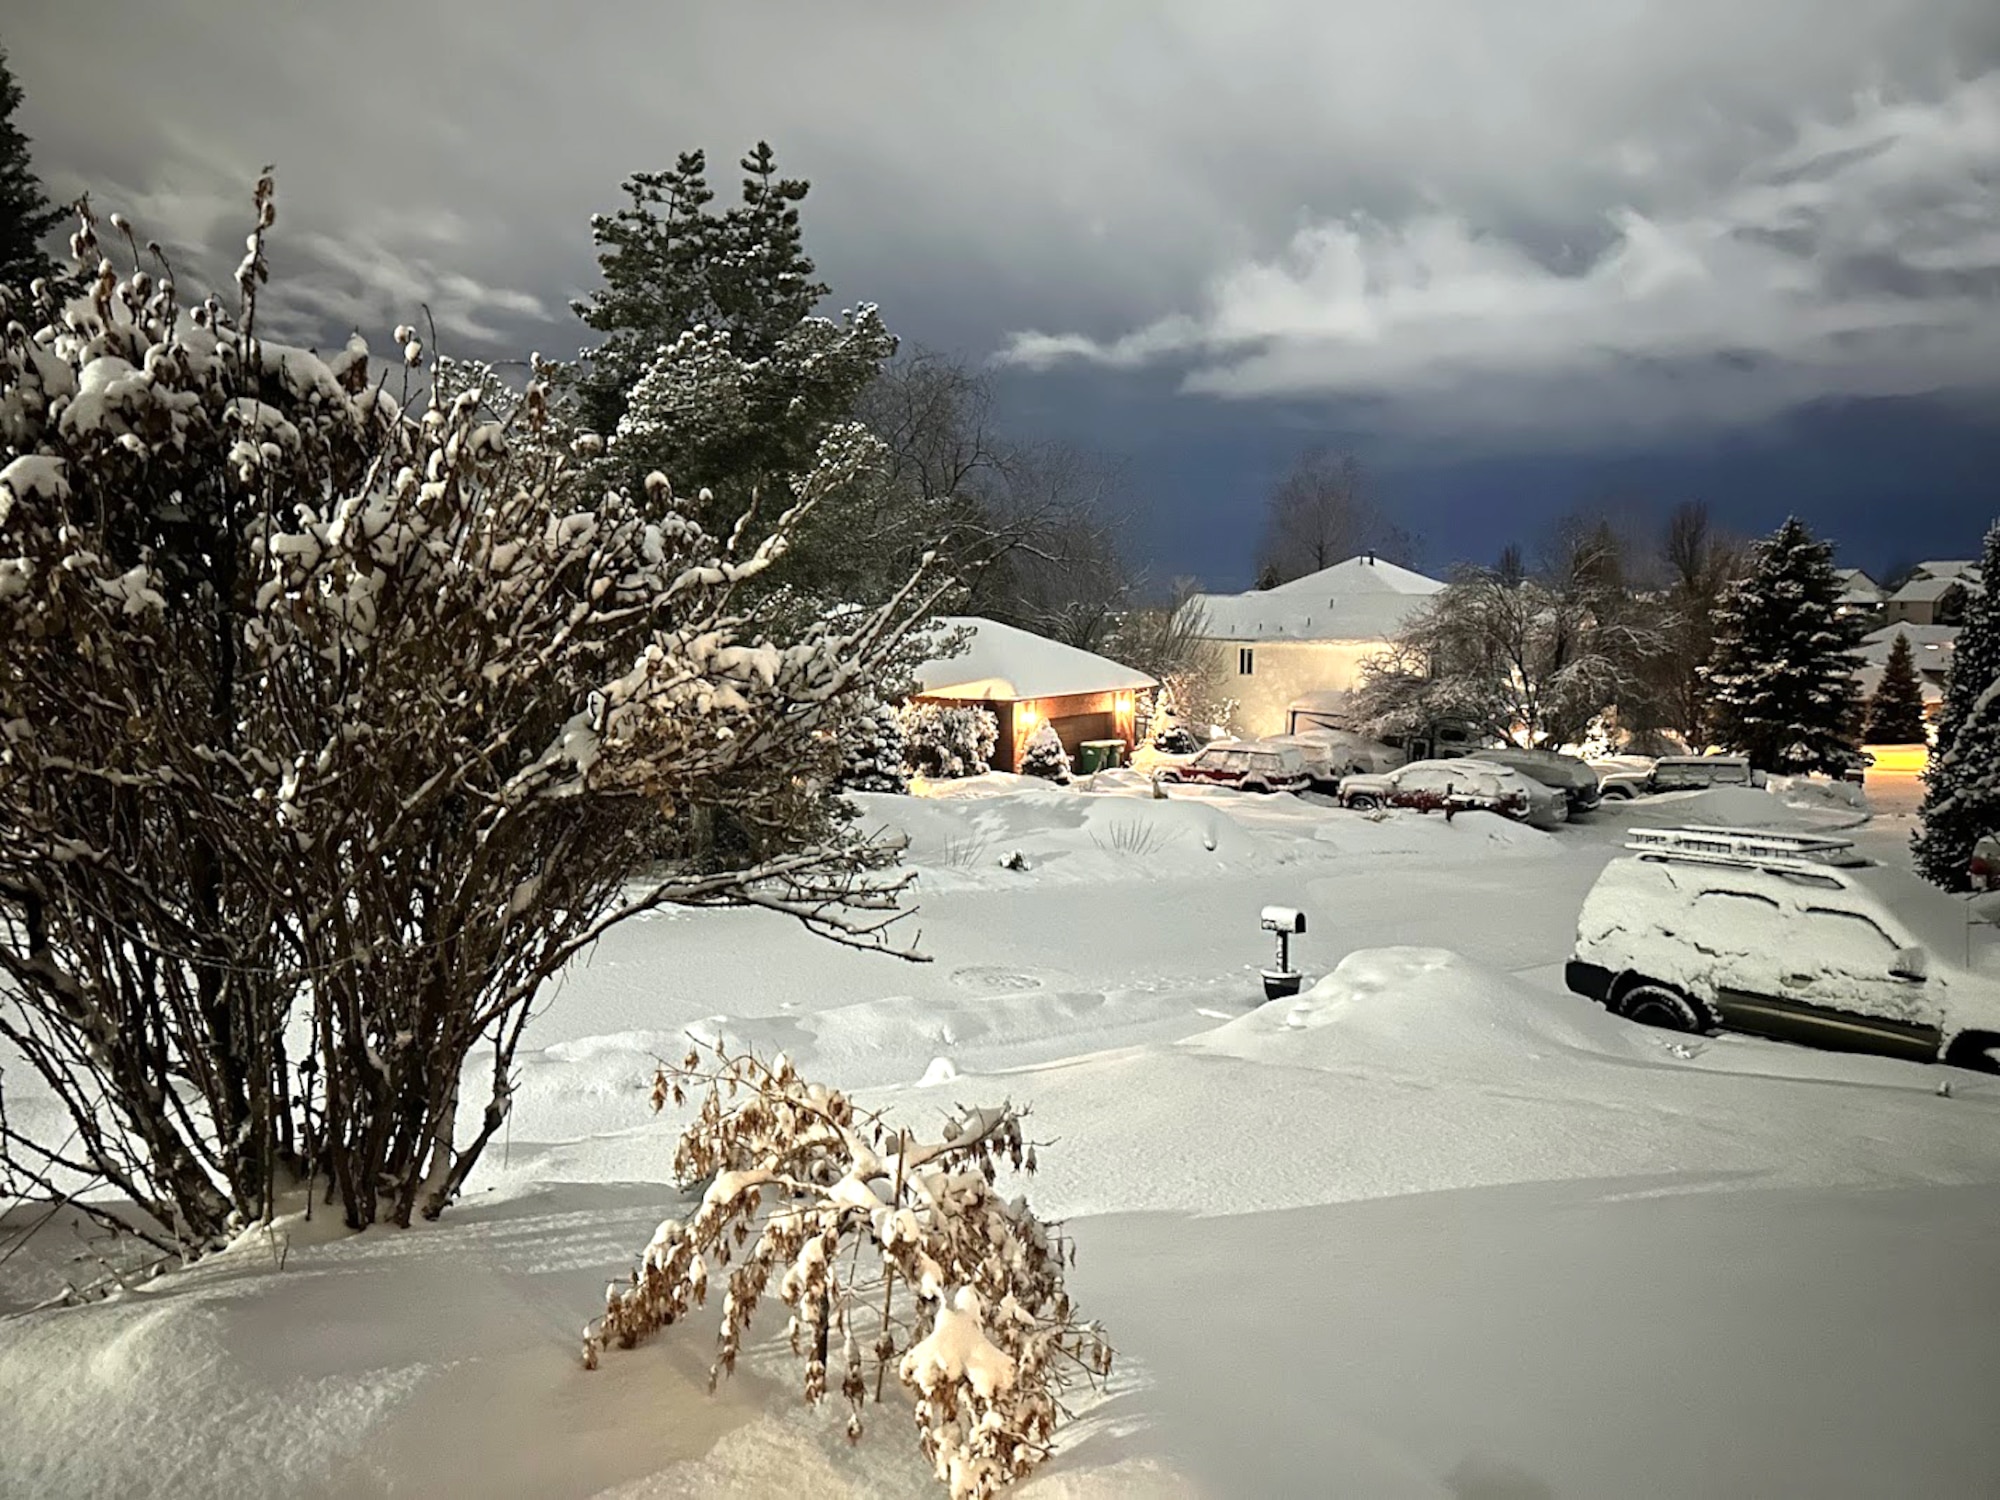 A suburban neighborhood blanketed in snow